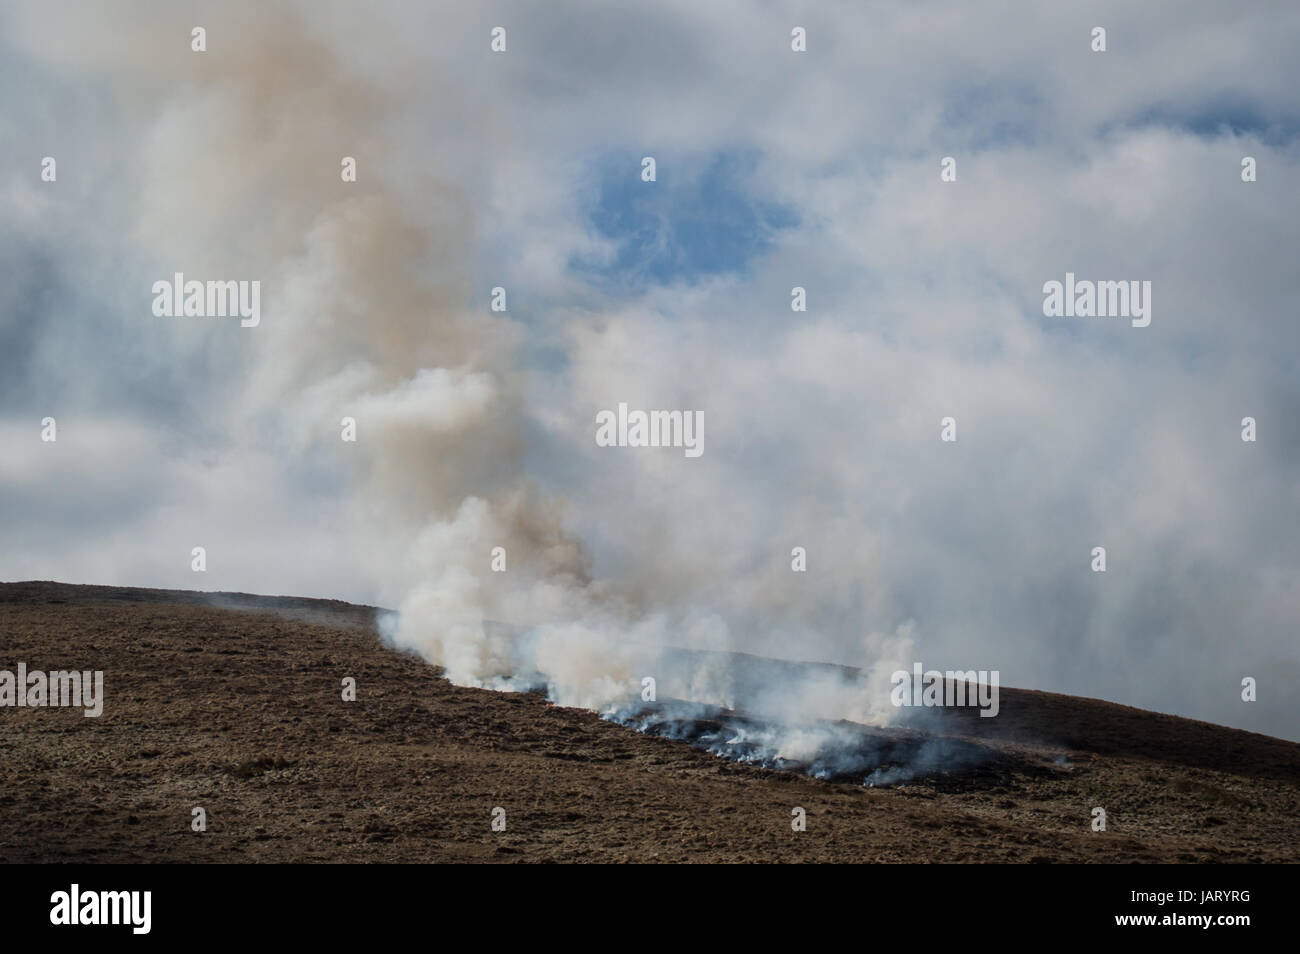 Fire on barren mountainside Stock Photo